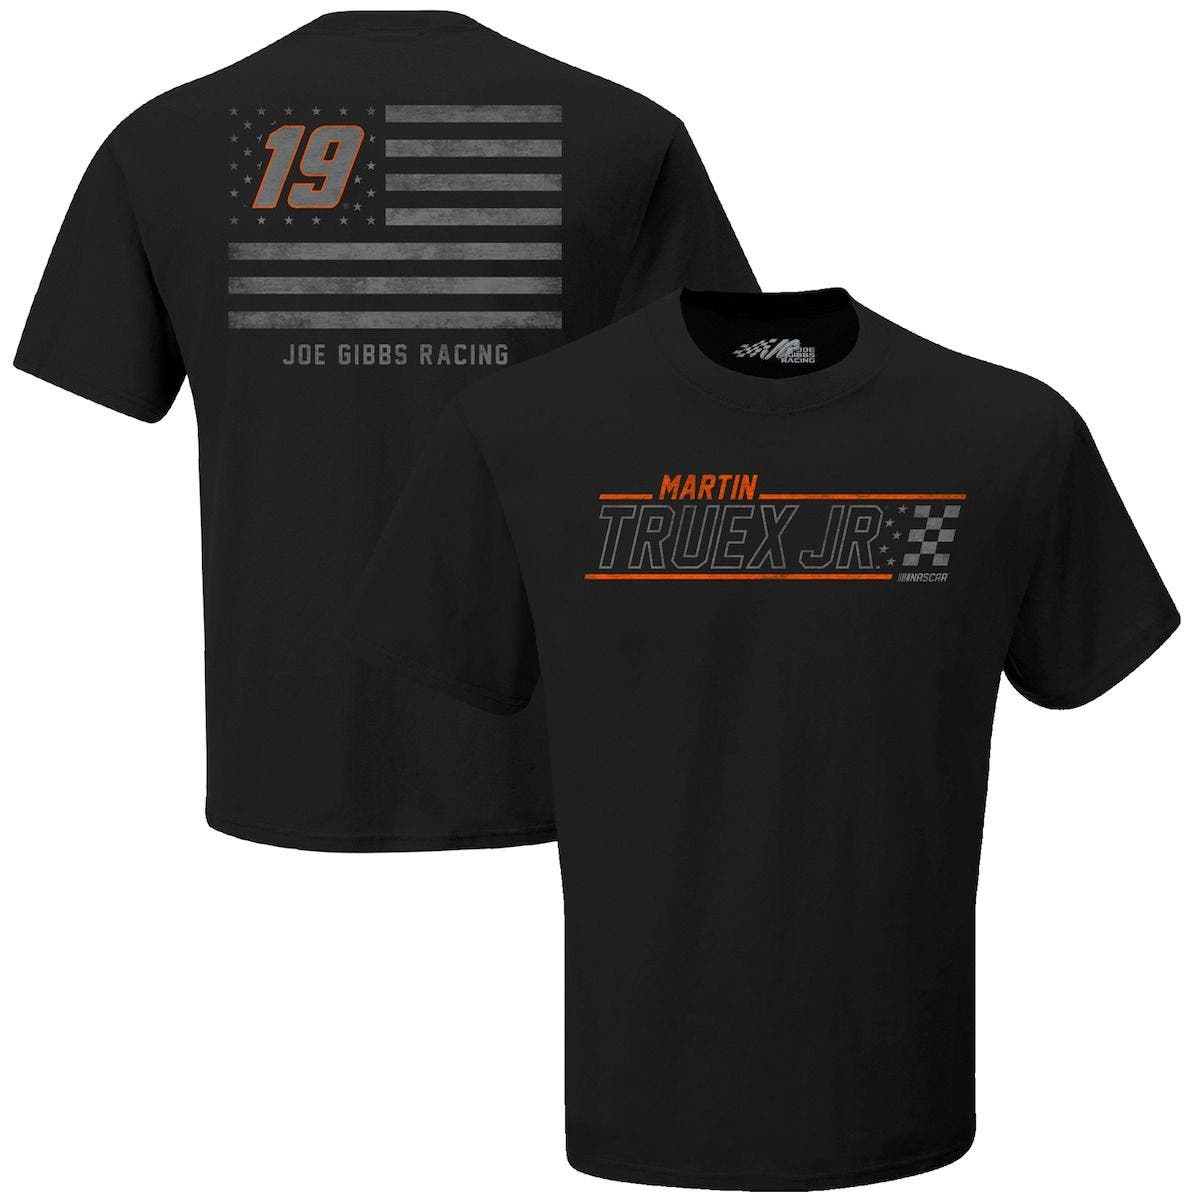 JOE GIBBS RACING TEAM COLLECTION Men's Joe Gibbs Racing Team Collection Black Martin Truex Jr Tonal Patriotic Flag T-Shirt at Nordstrom